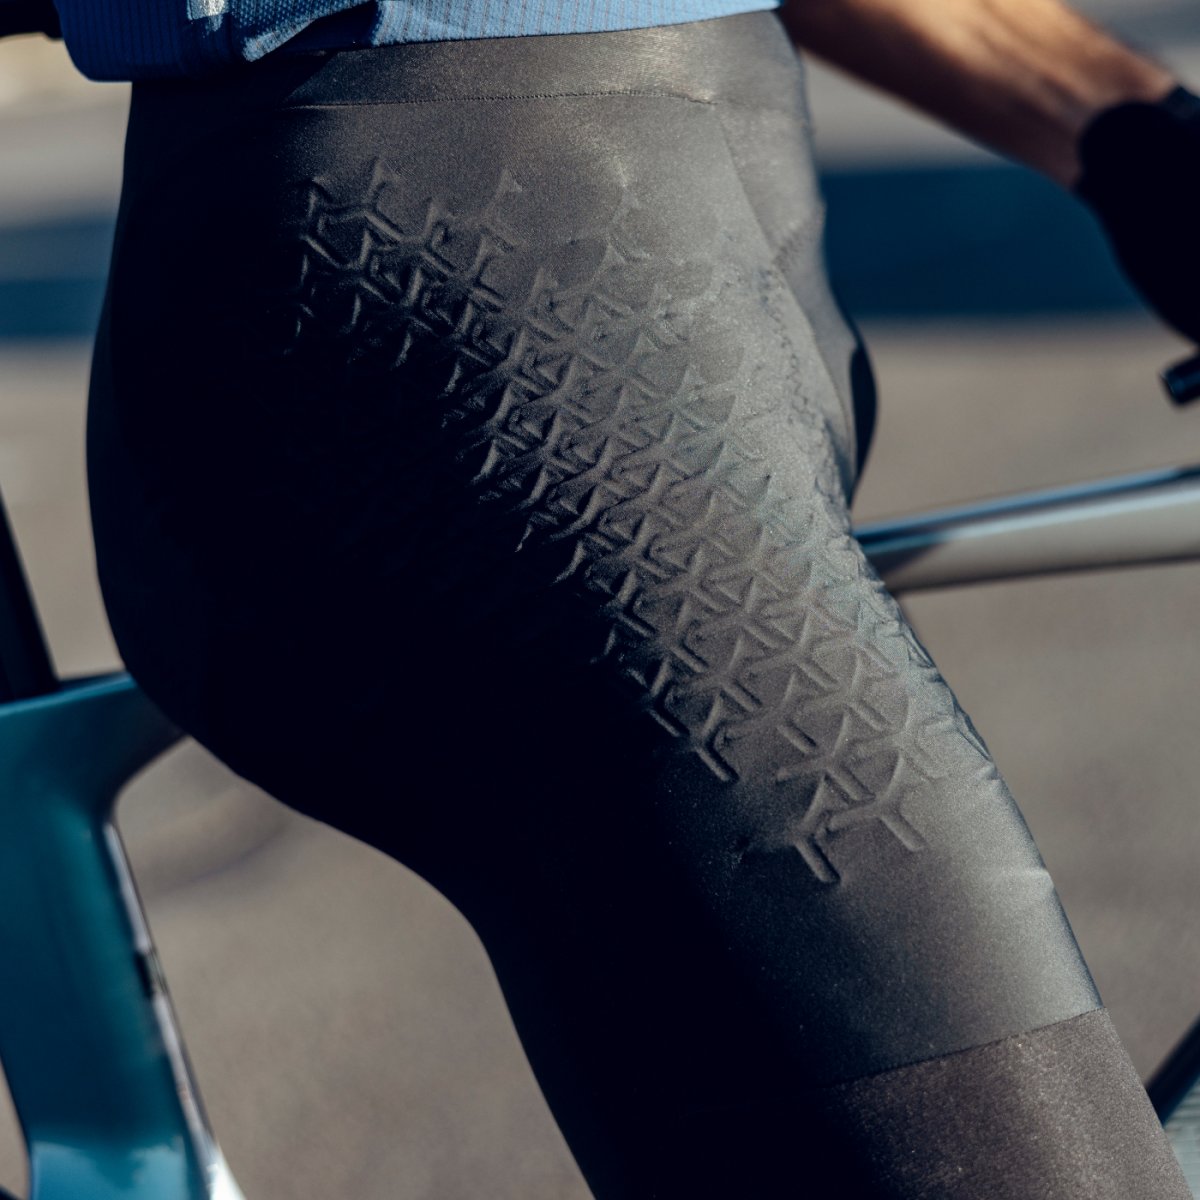 Review: Q36.5 Grid Skin Jersey and Bib Shorts - PezCycling News